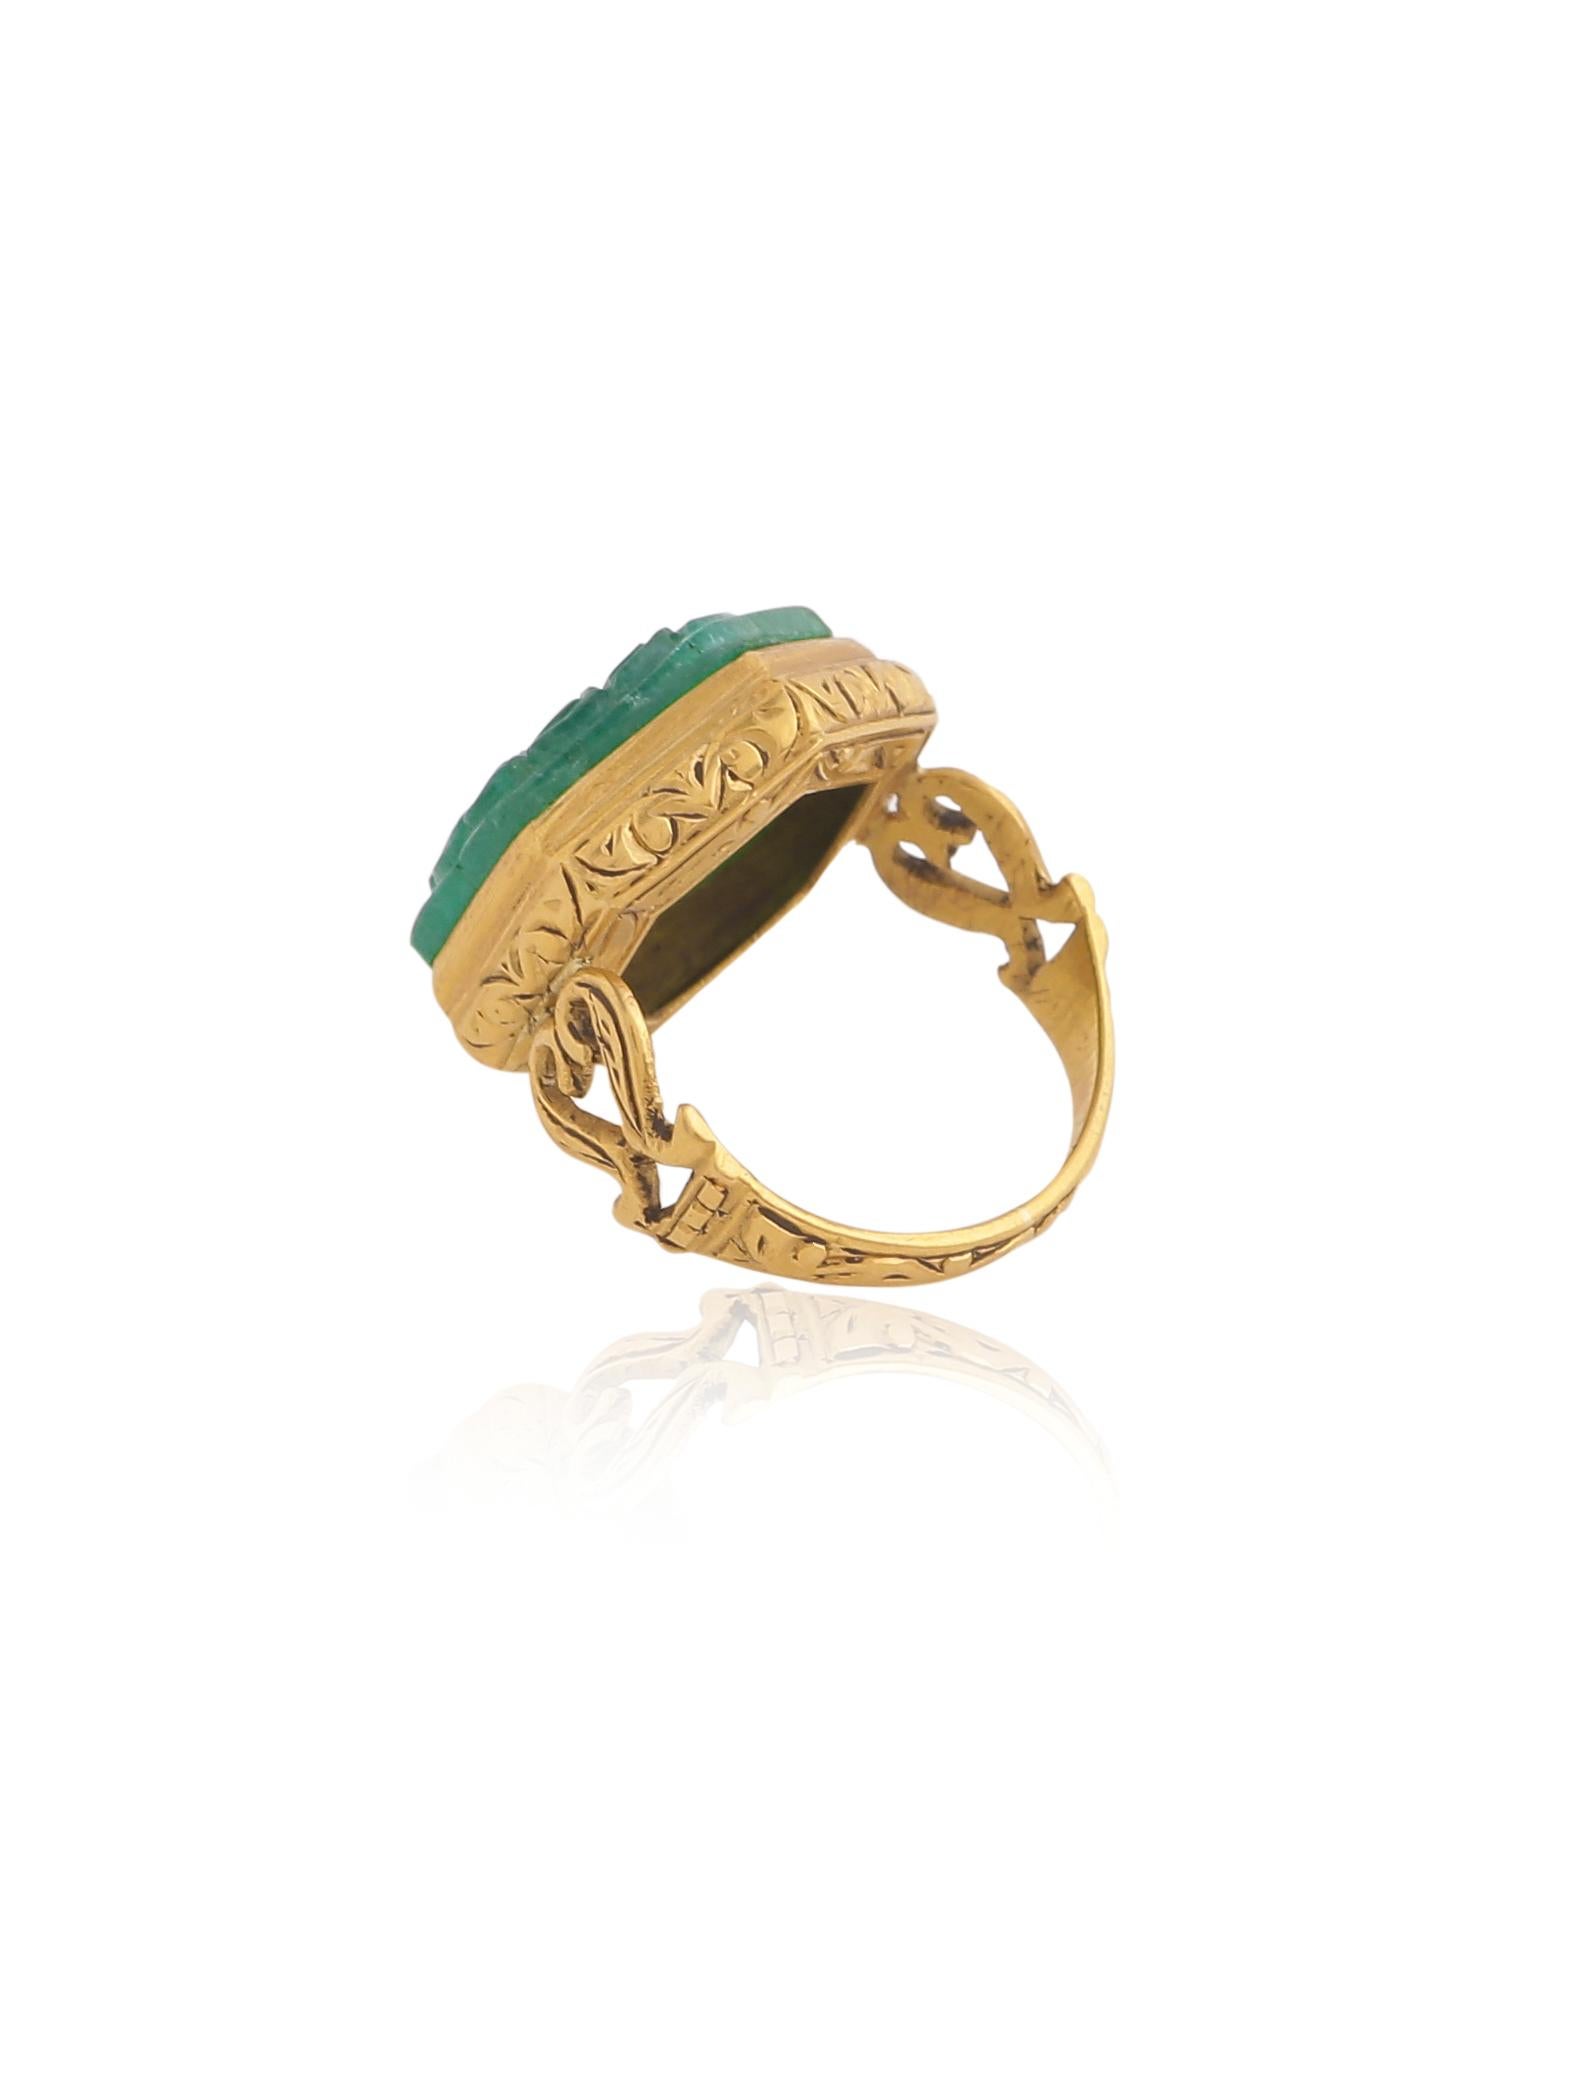 Art Deco Floral Motif Natural Carved Emerald and 18 Karat Gold Statement Ring